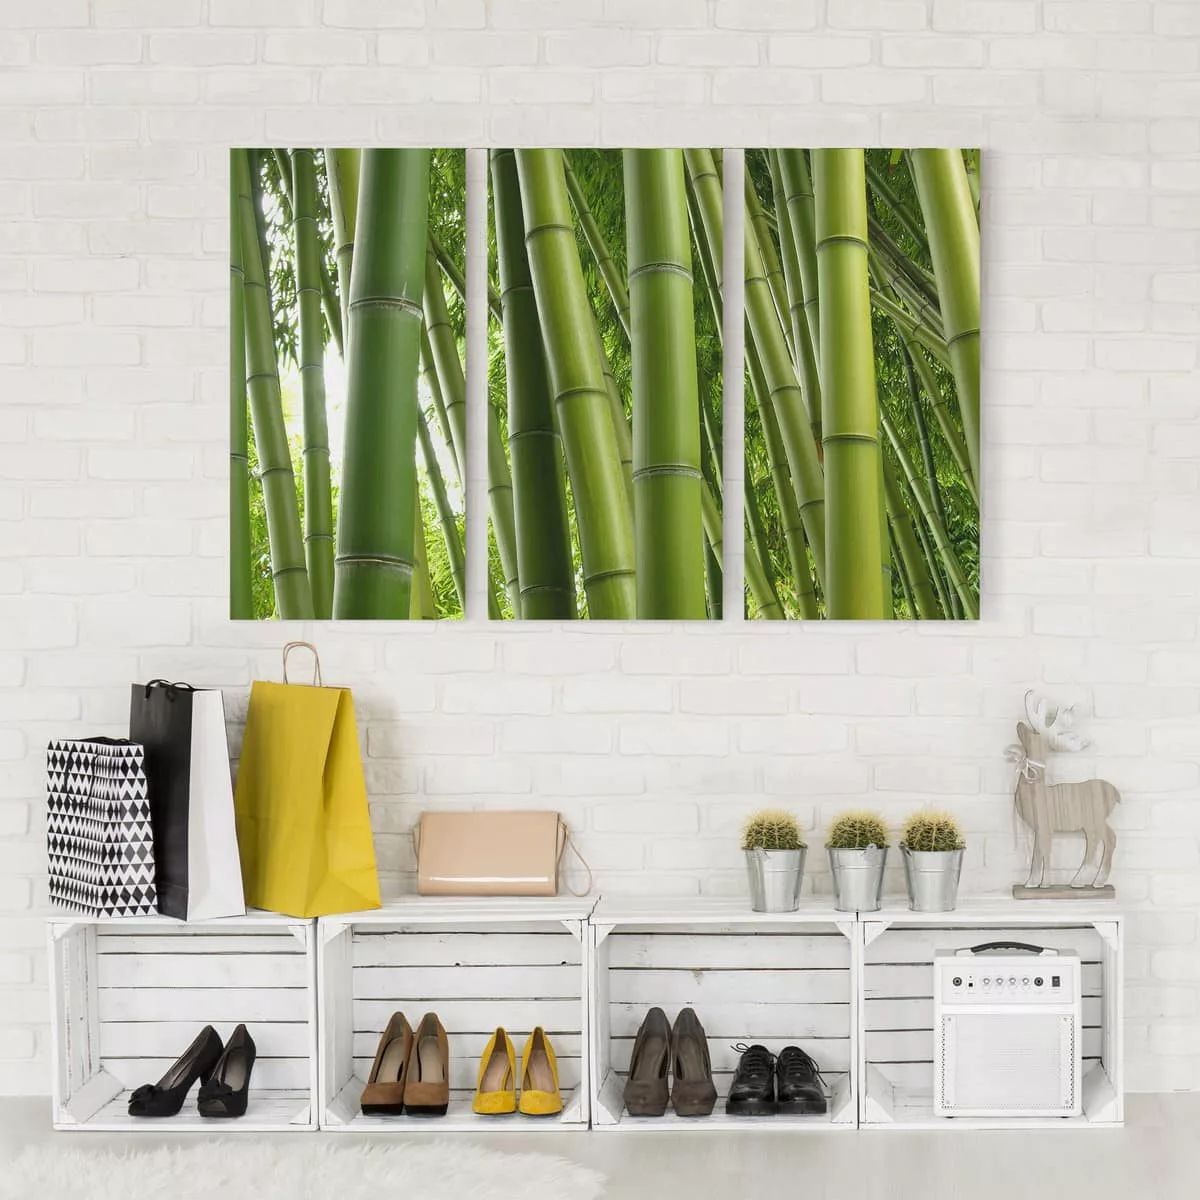 3-teiliges Leinwandbild Bambus - Querformat Bamboo Trees günstig online kaufen